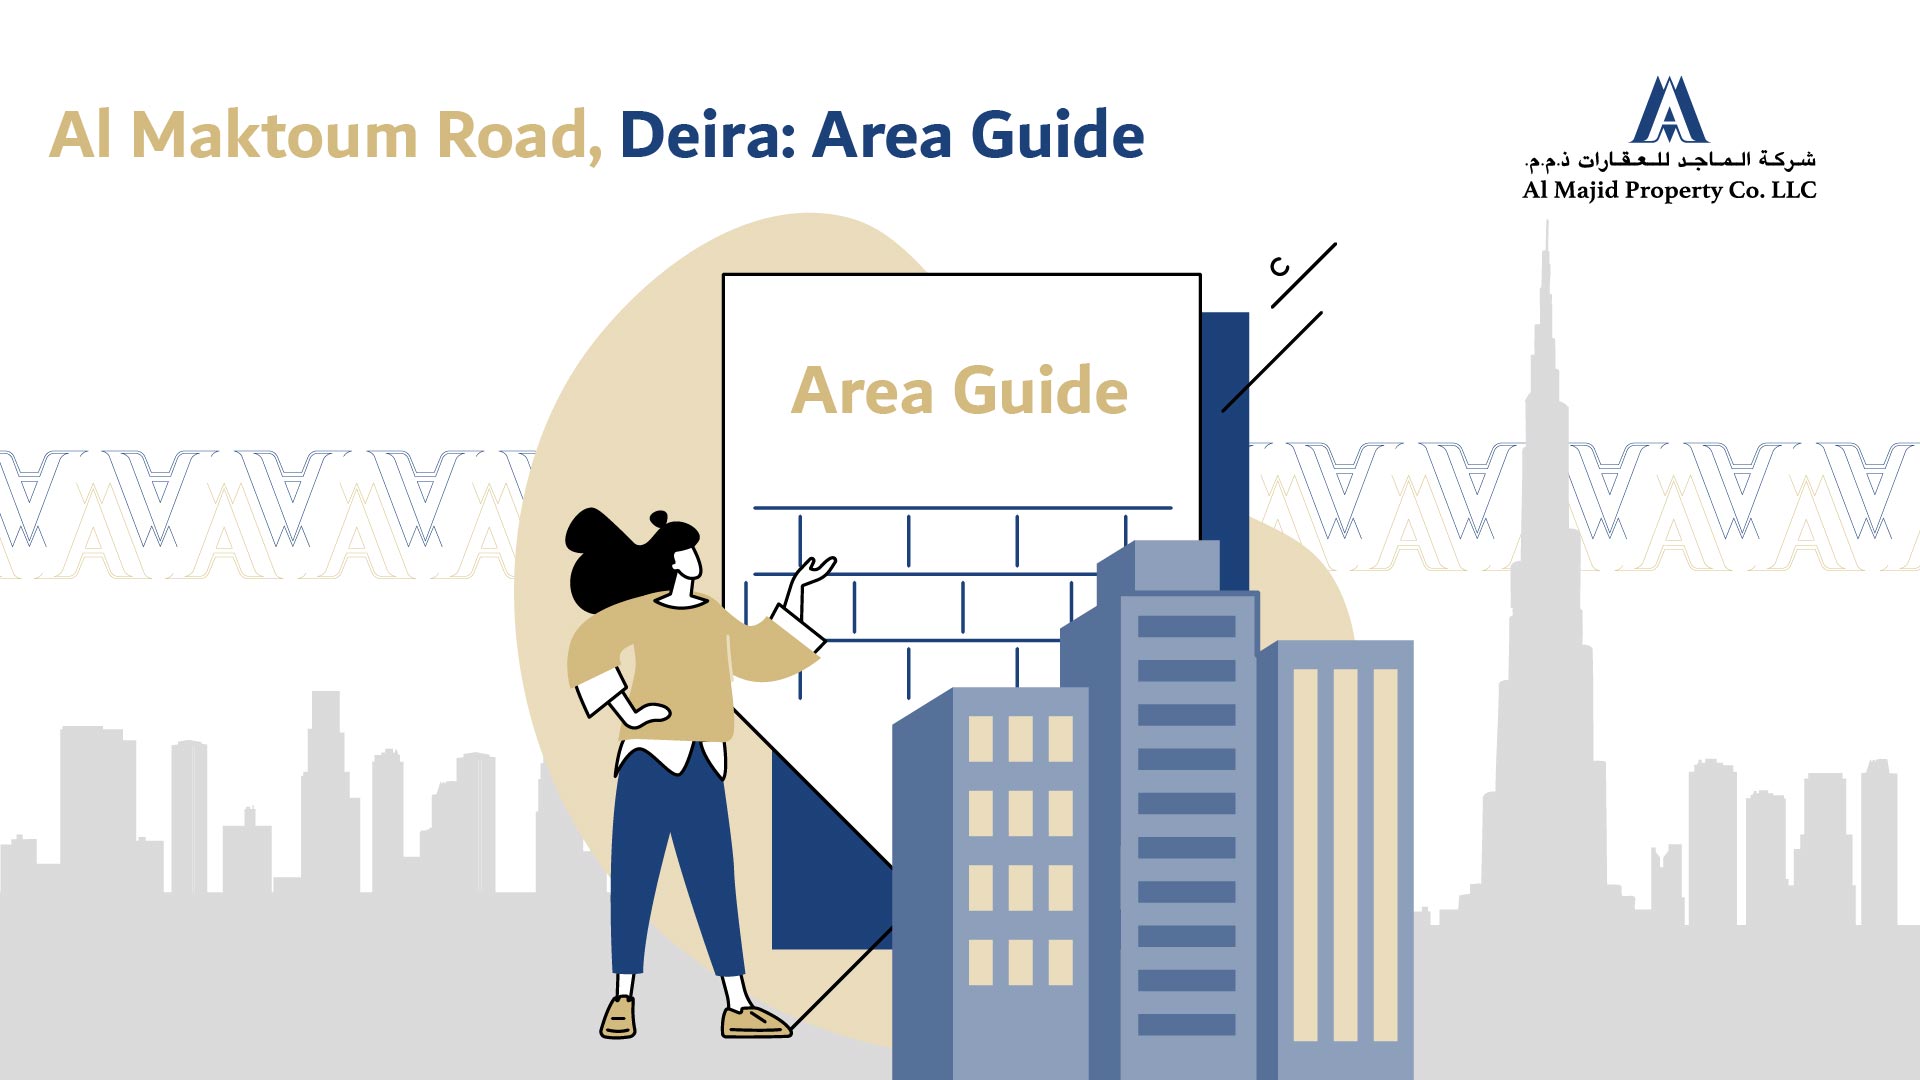 Al Maktoum Road, Deira: Area Guide